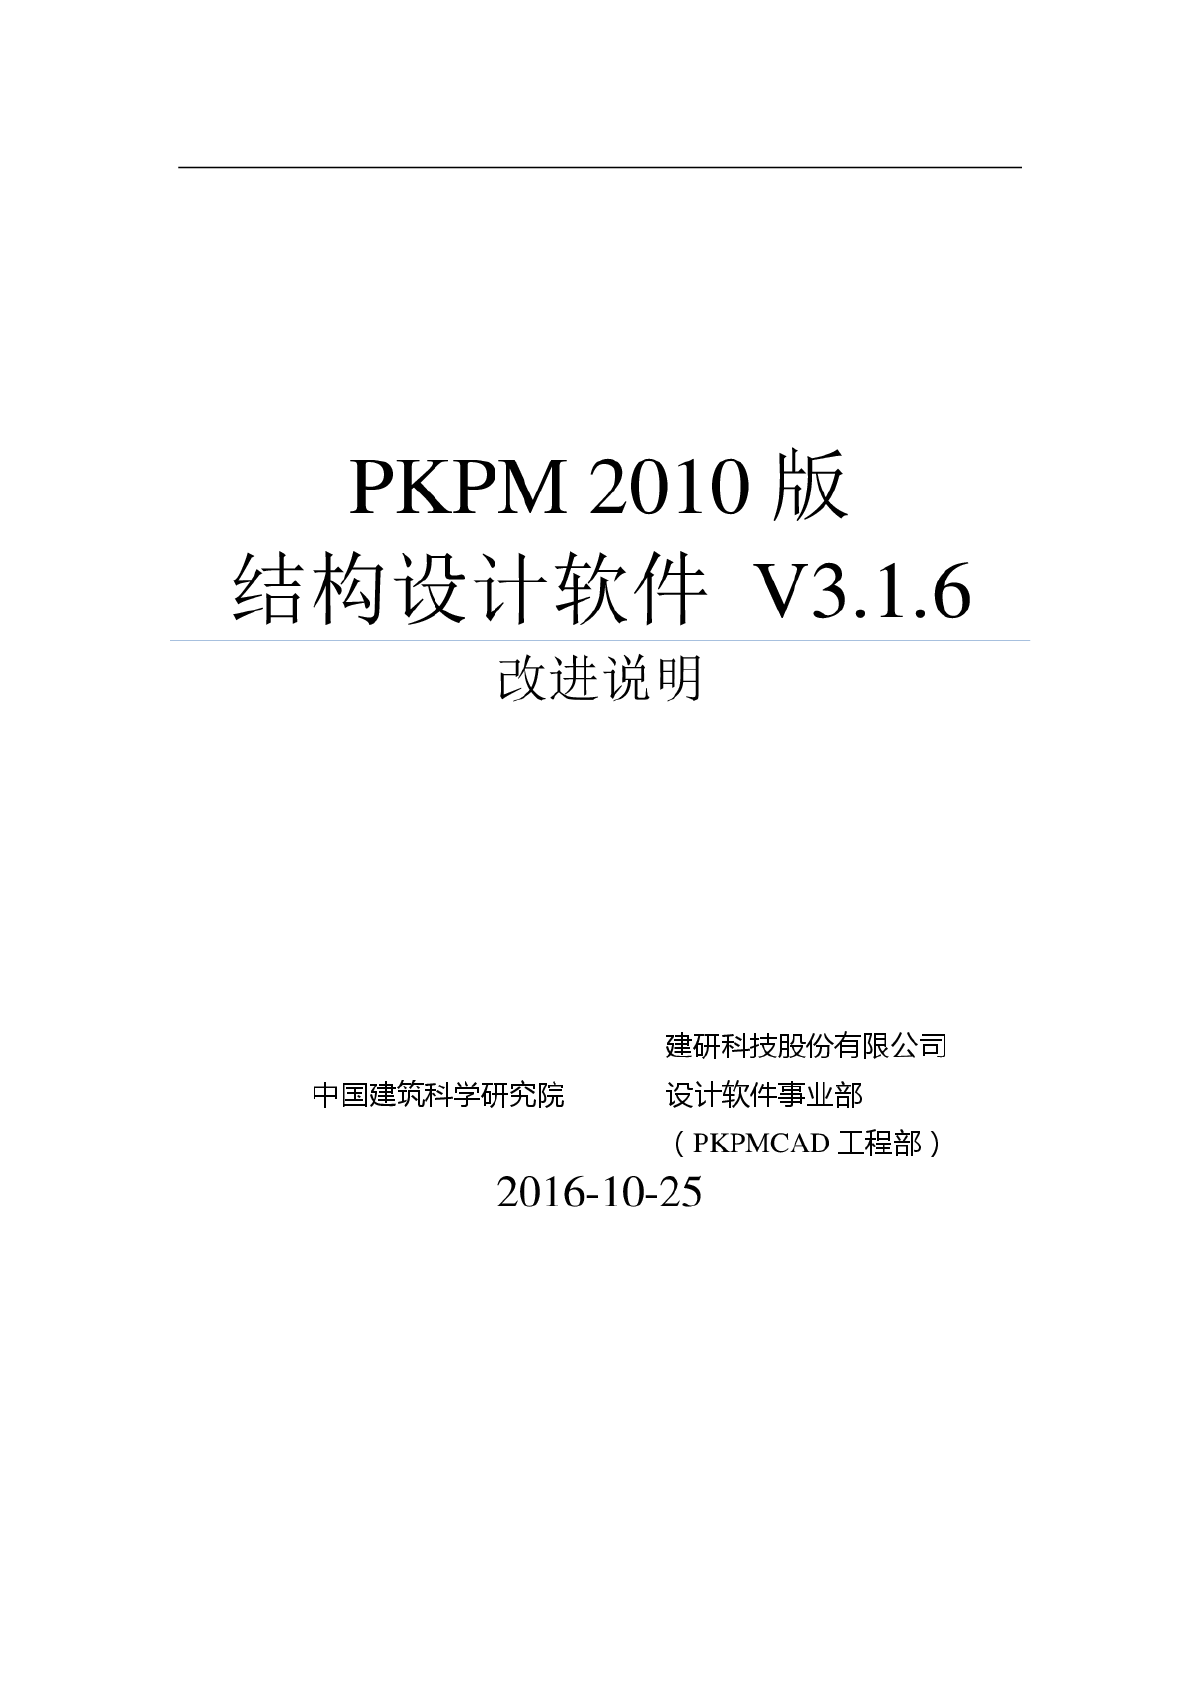 PKPM2010-V3.1.6版 改进说明.pdf